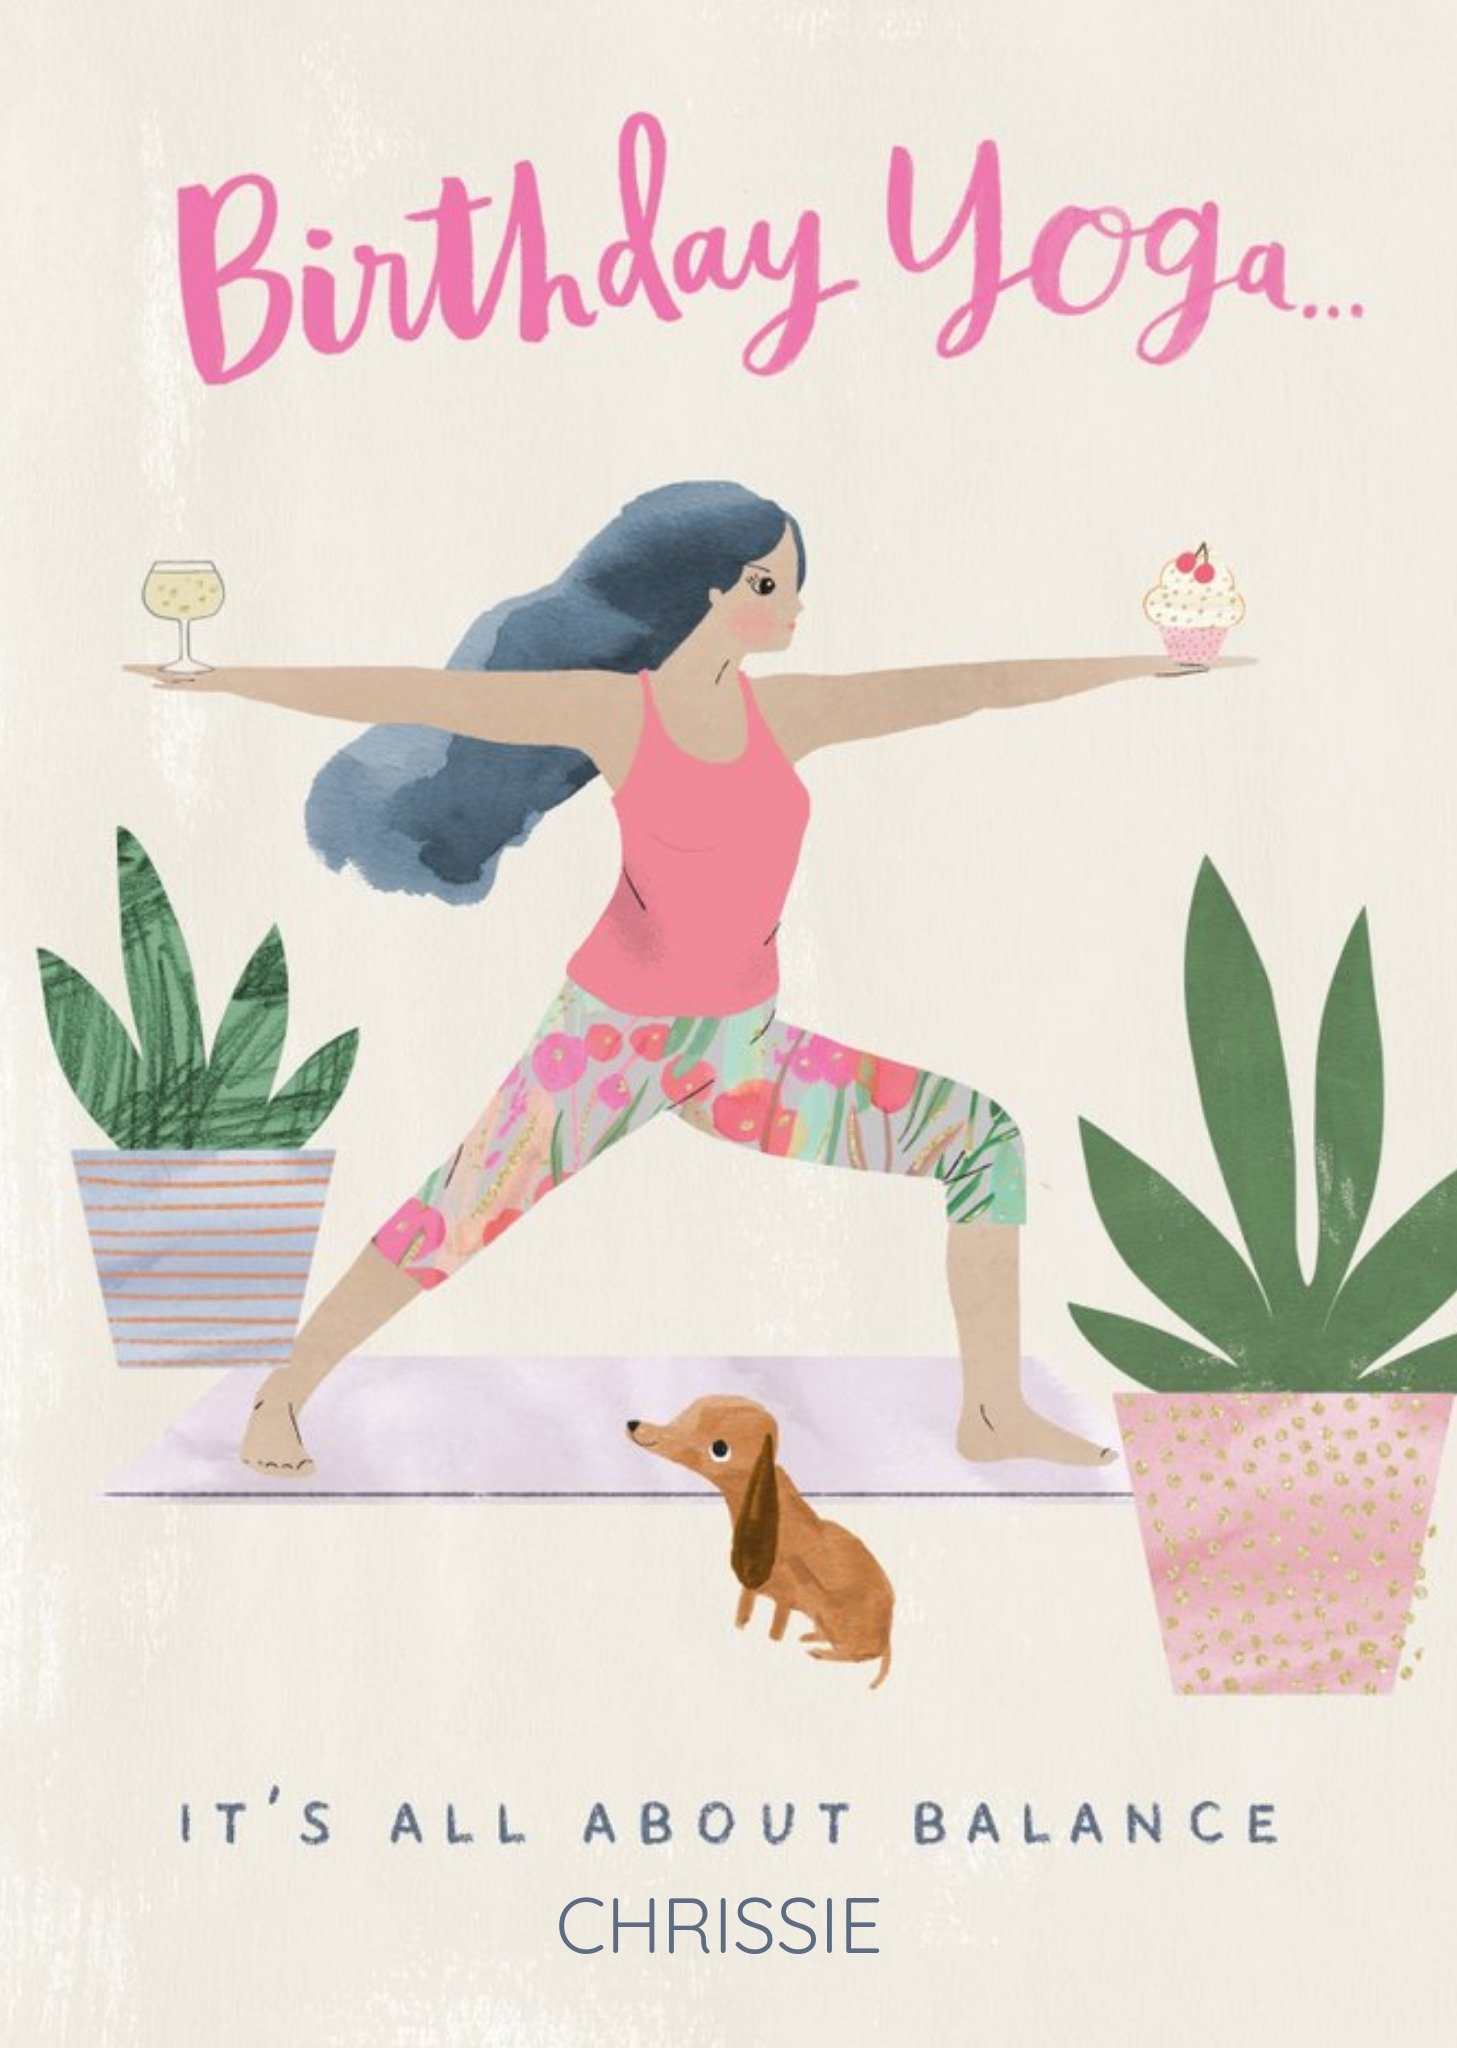 Moonpig Pigment Hey Girl Birthday Yoga Life Balance Health Wellbeing Birthday Postcard